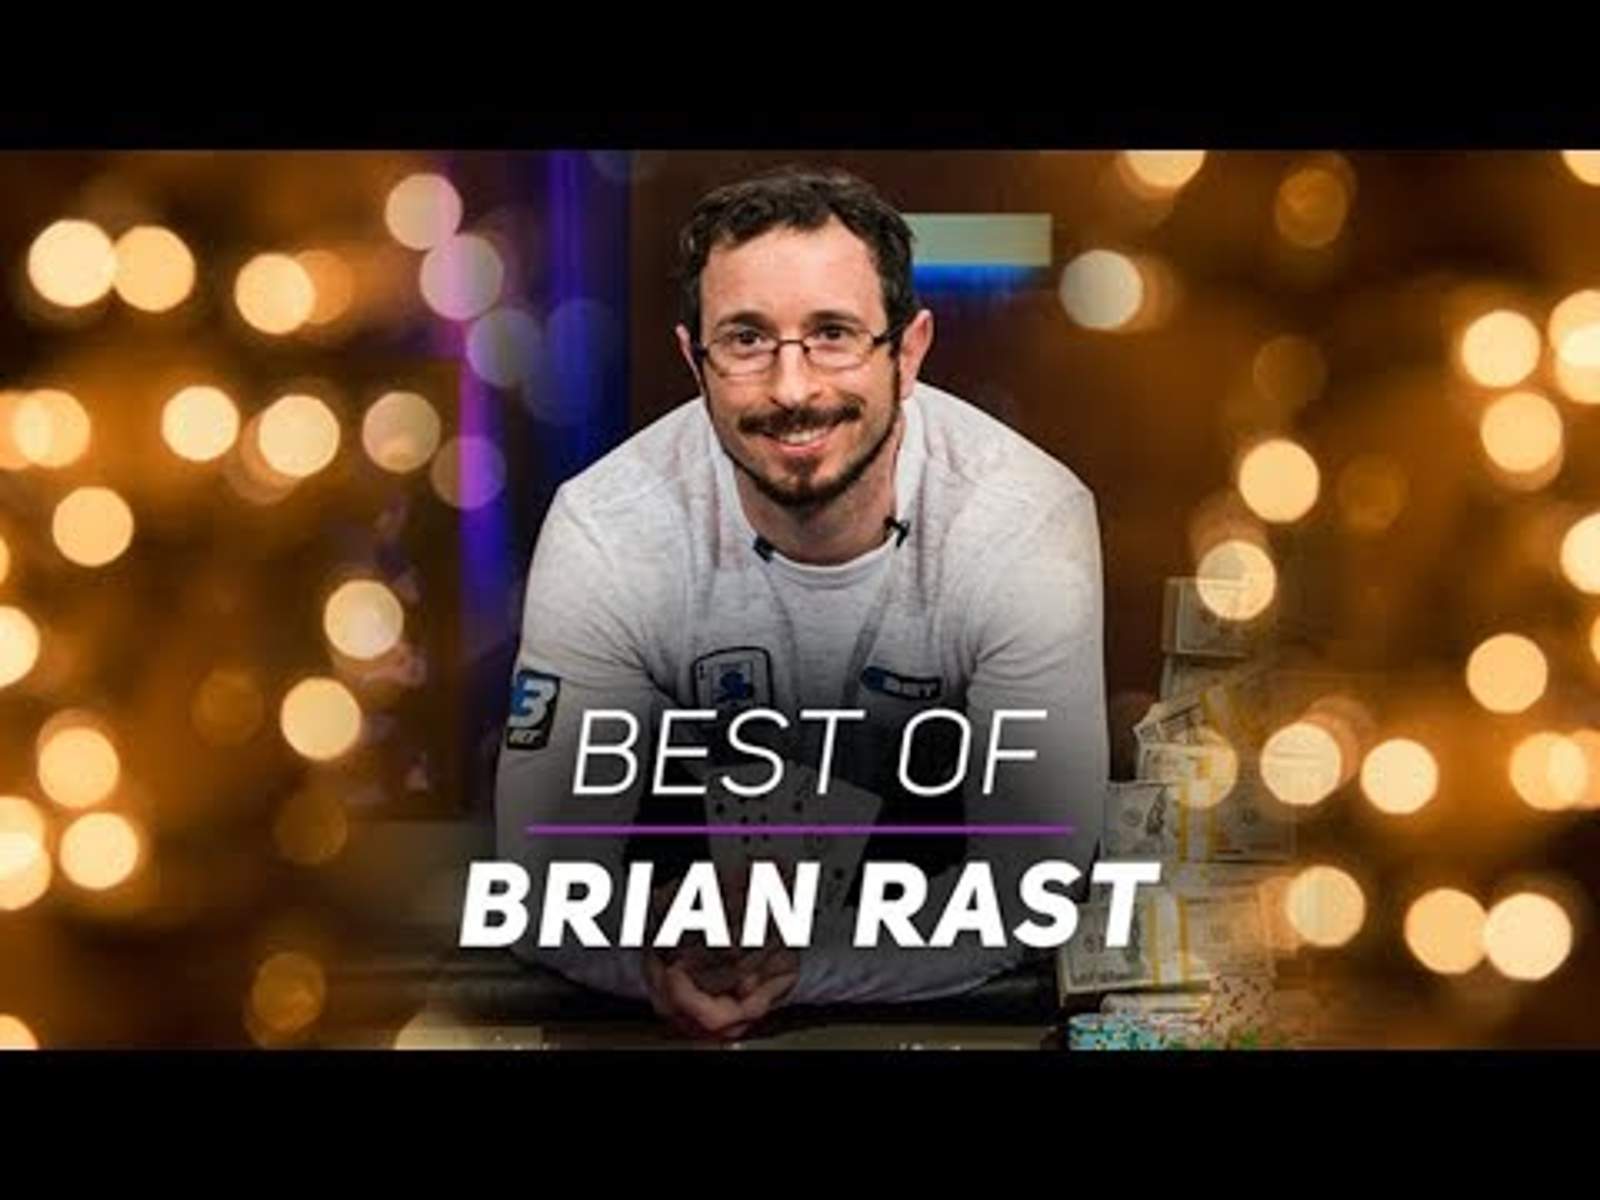 The Best of Brian Rast - Now on PokerGO